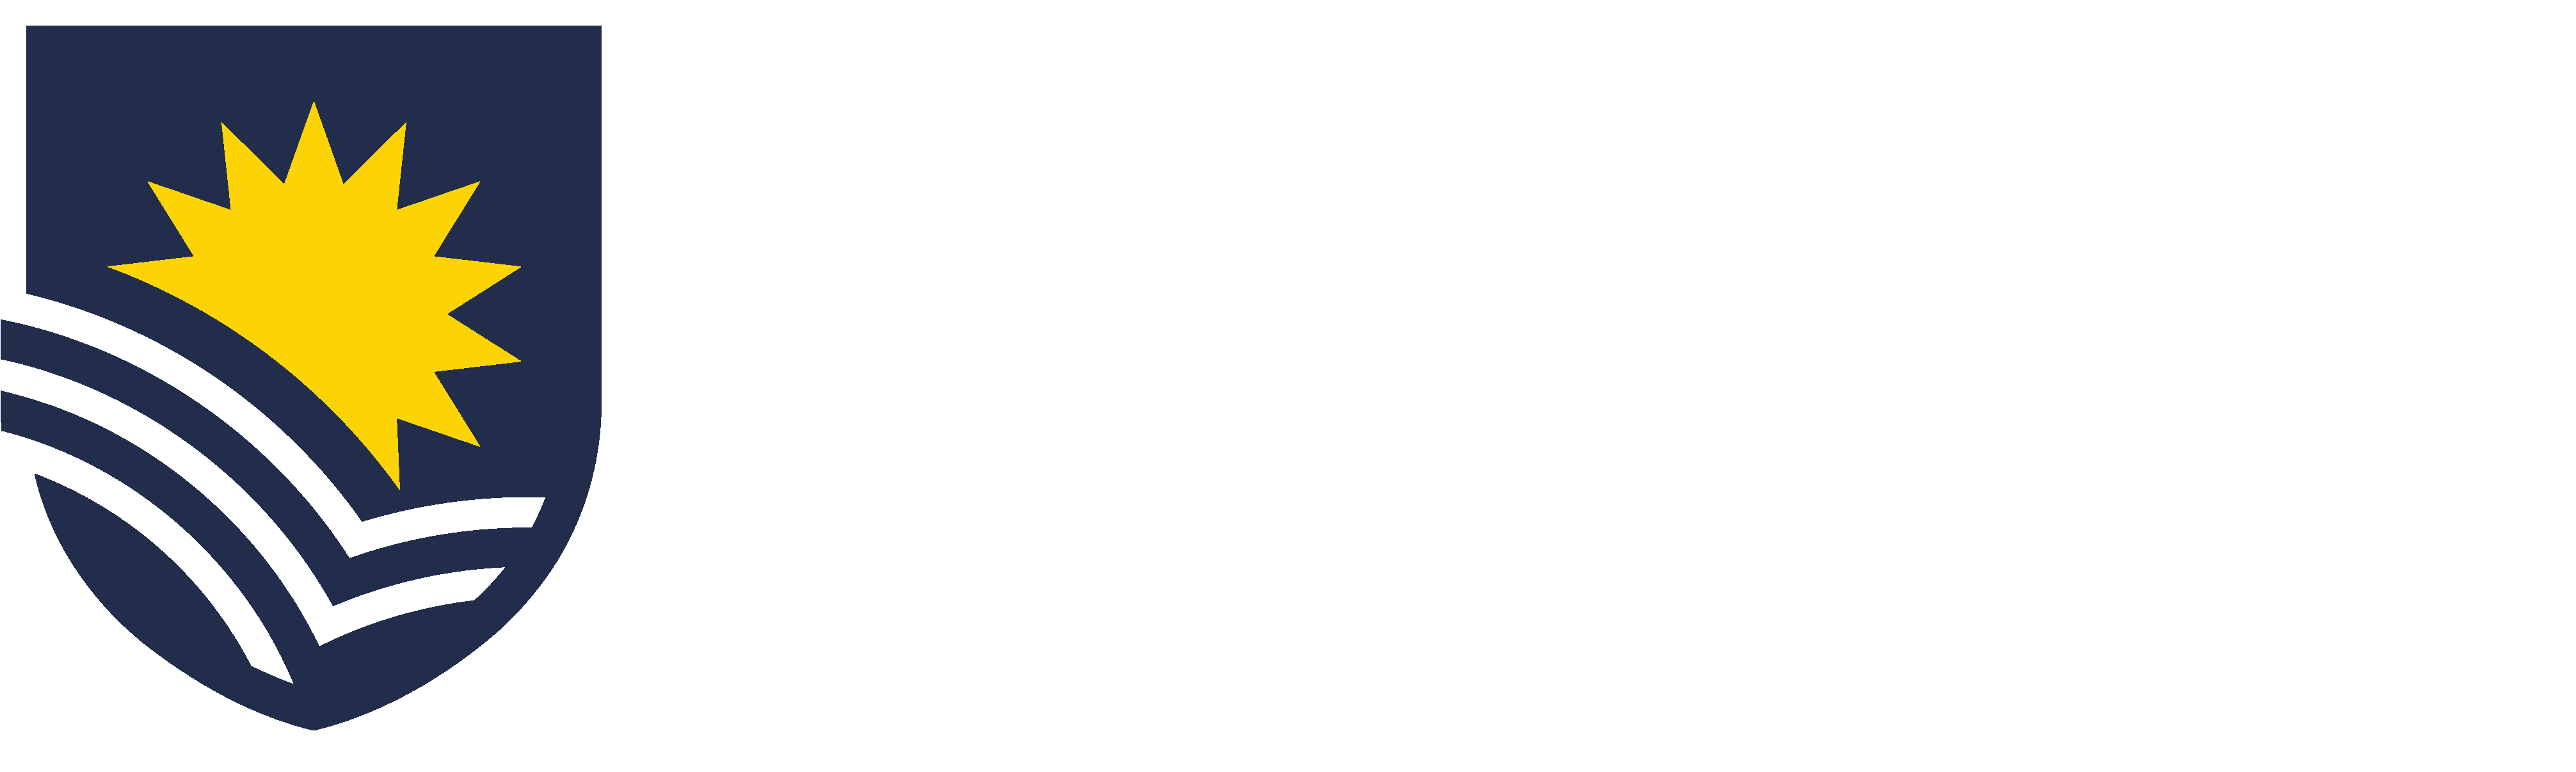 01 Flinders University company logo